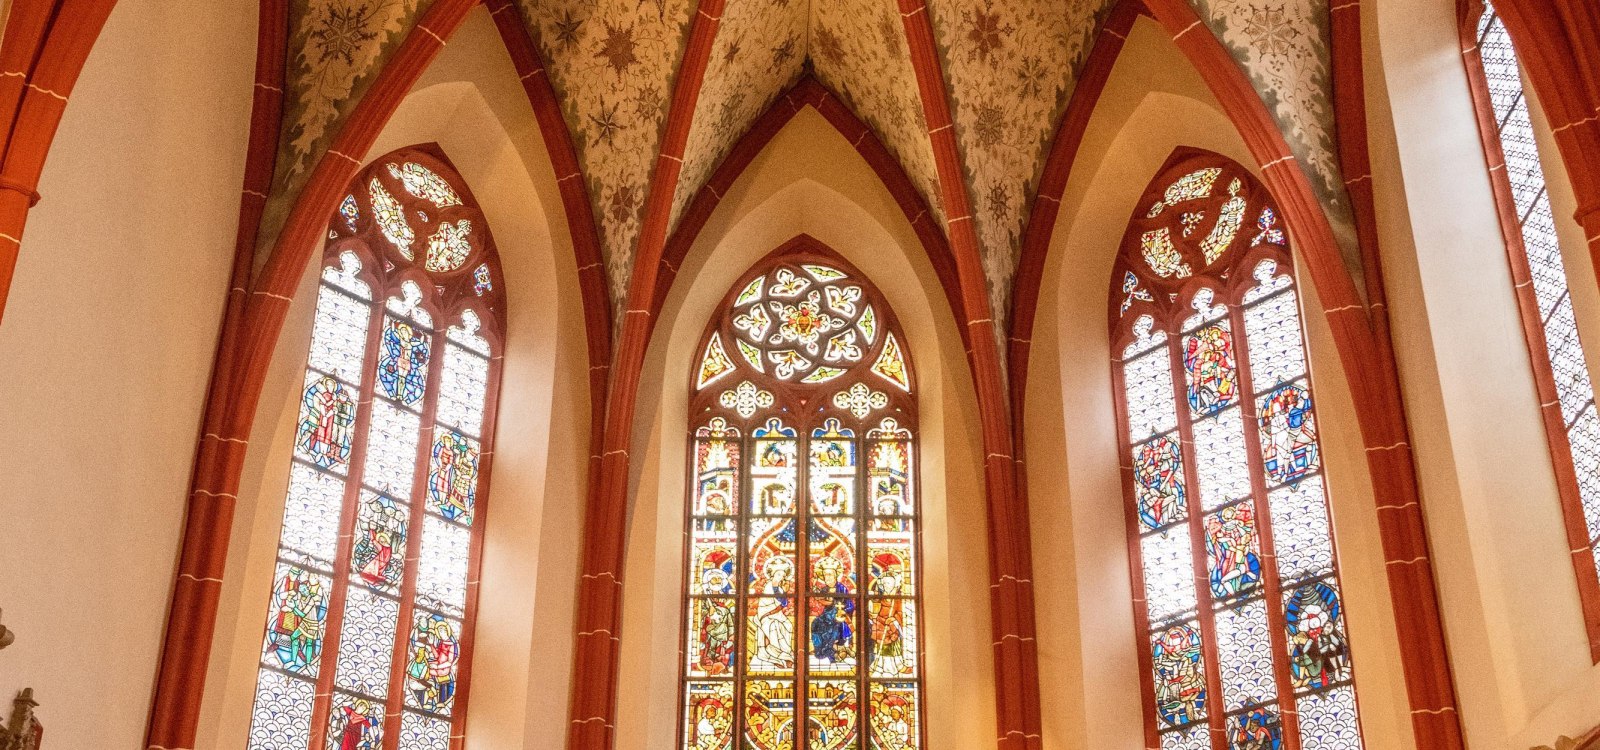 Altarraum Burgkirche Ober-Ingelheim 1, © Dominik Ketz/RHT GmbH